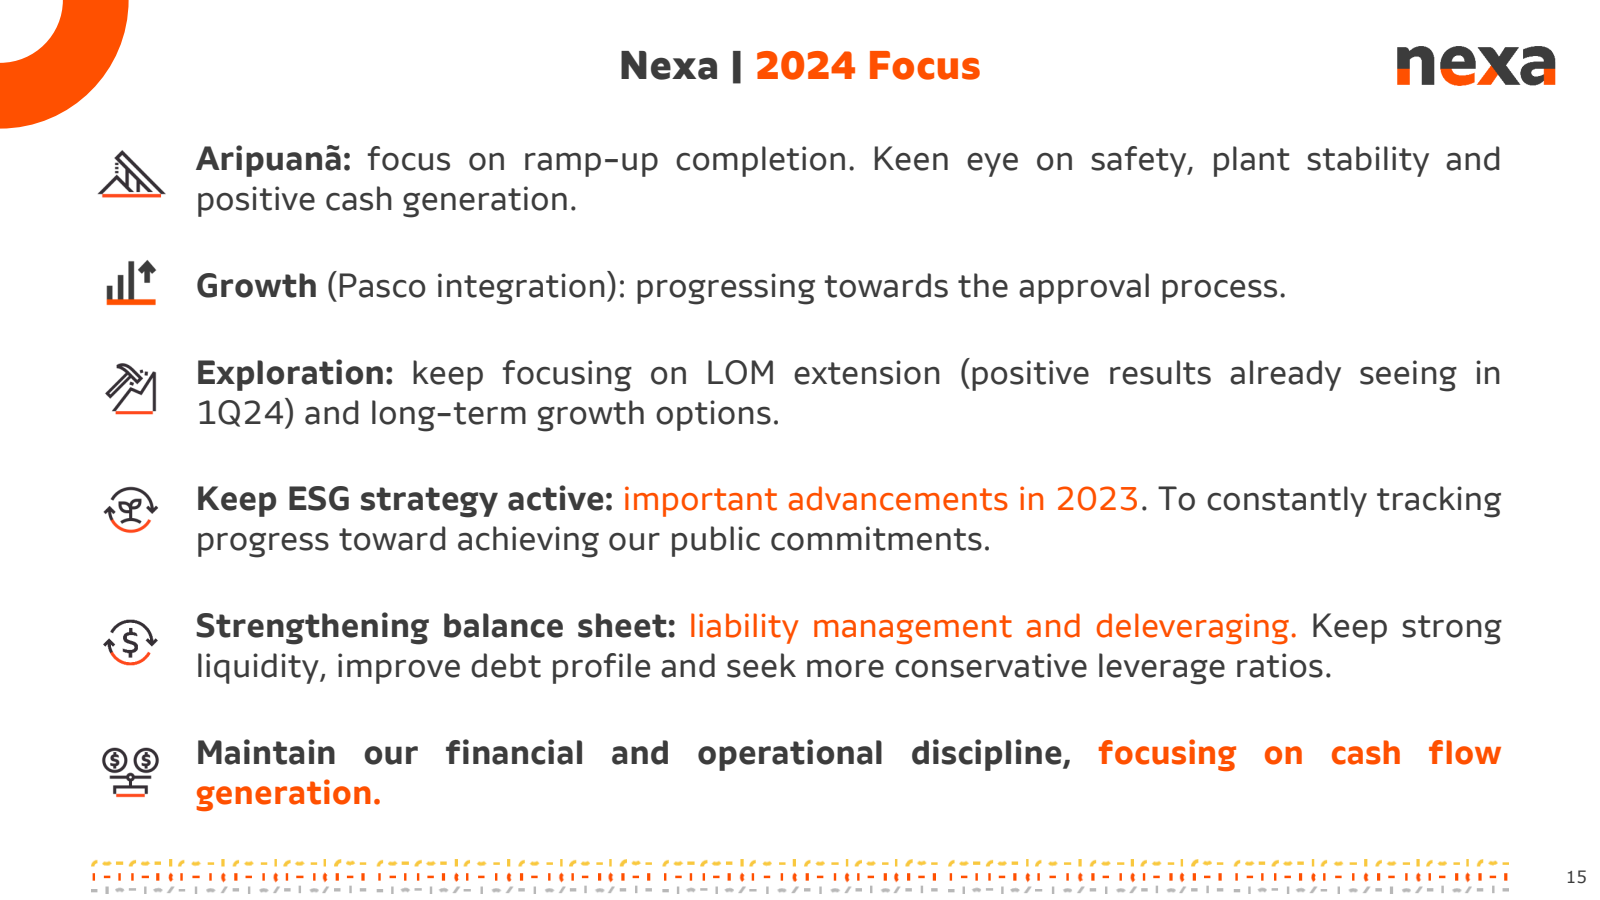 Nexa | 2024 Focus 

